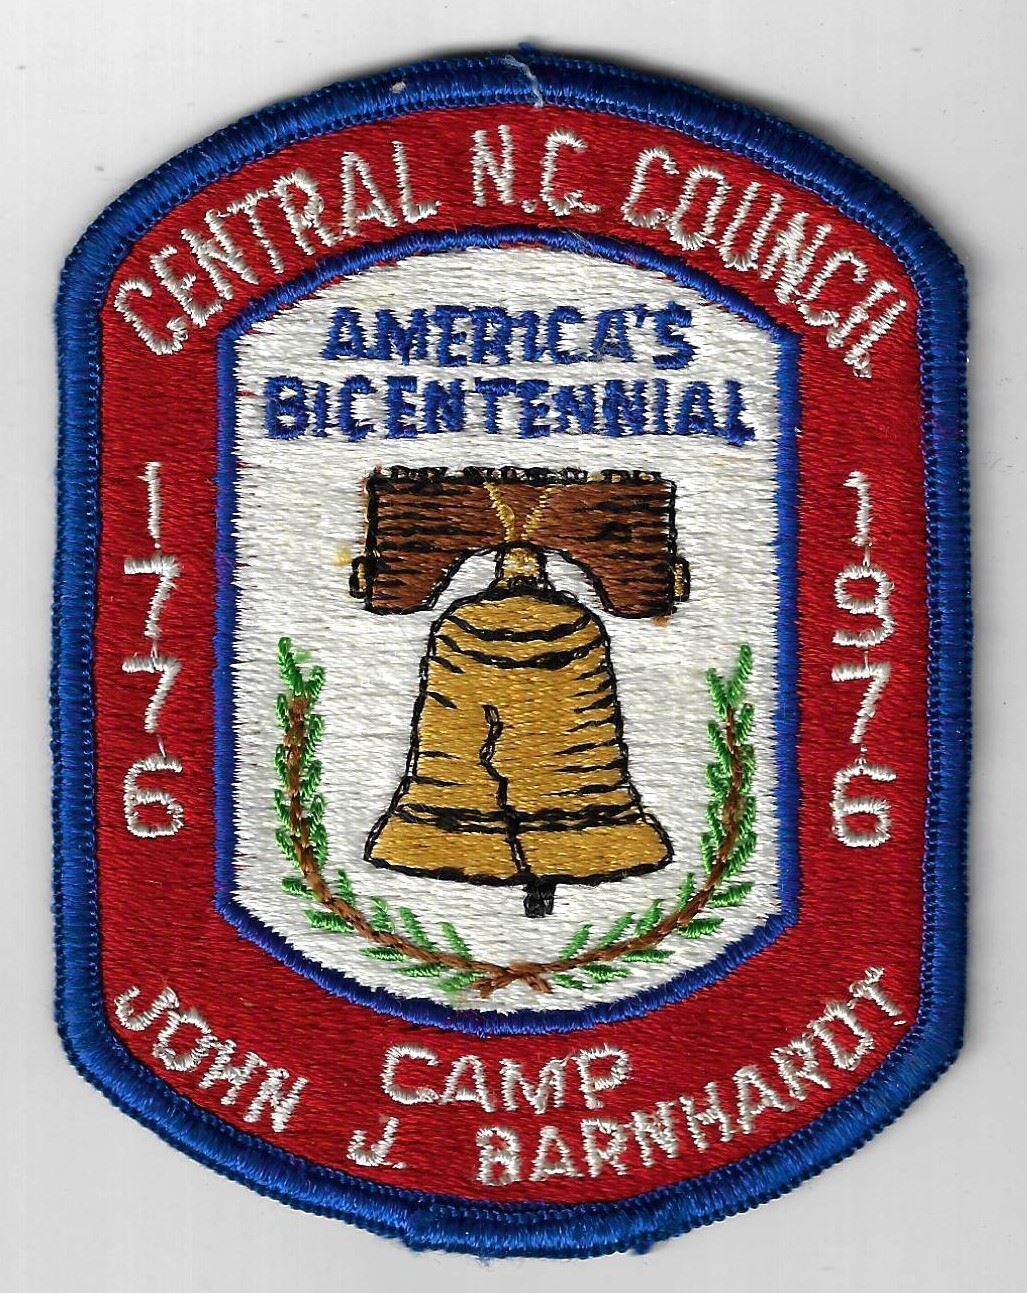 1776-1976 Camp John J. Barnhardt Central NC Council RBL Bdr. [CA-402]